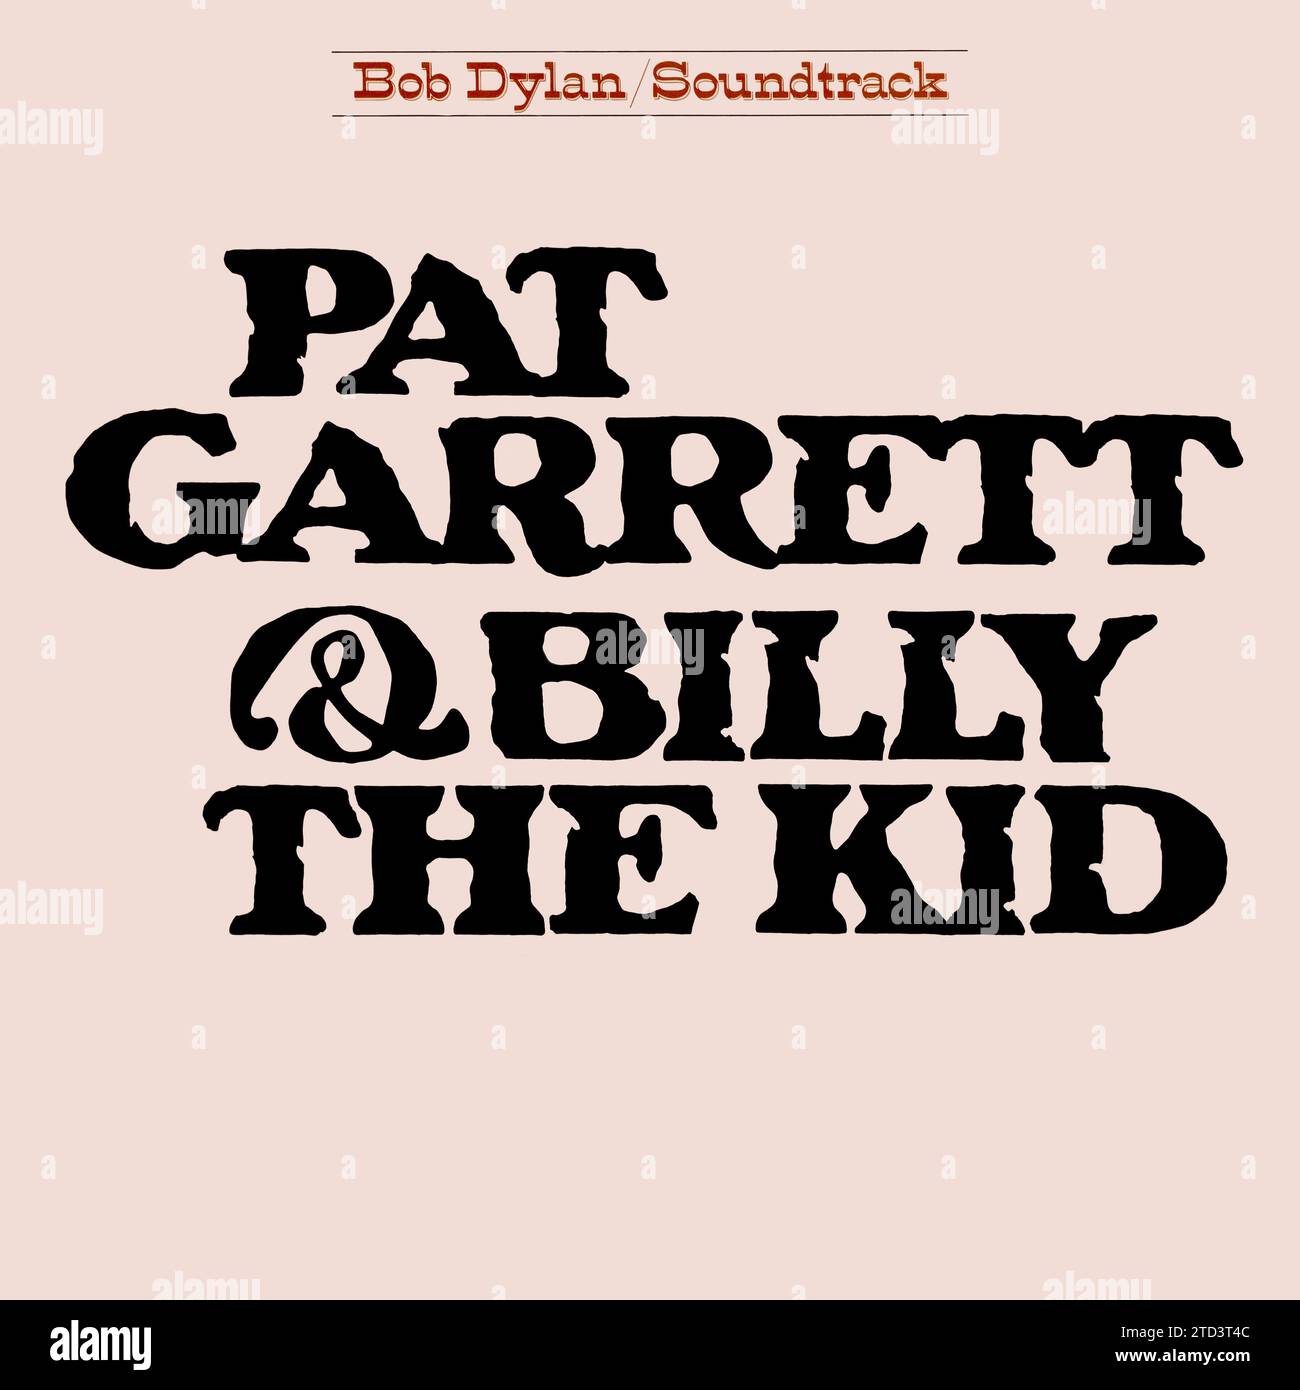 Bob Dylan - Original-Vinyl-Album-Cover - Pat Garrett & Billy The Kid - 1973 Stockfoto